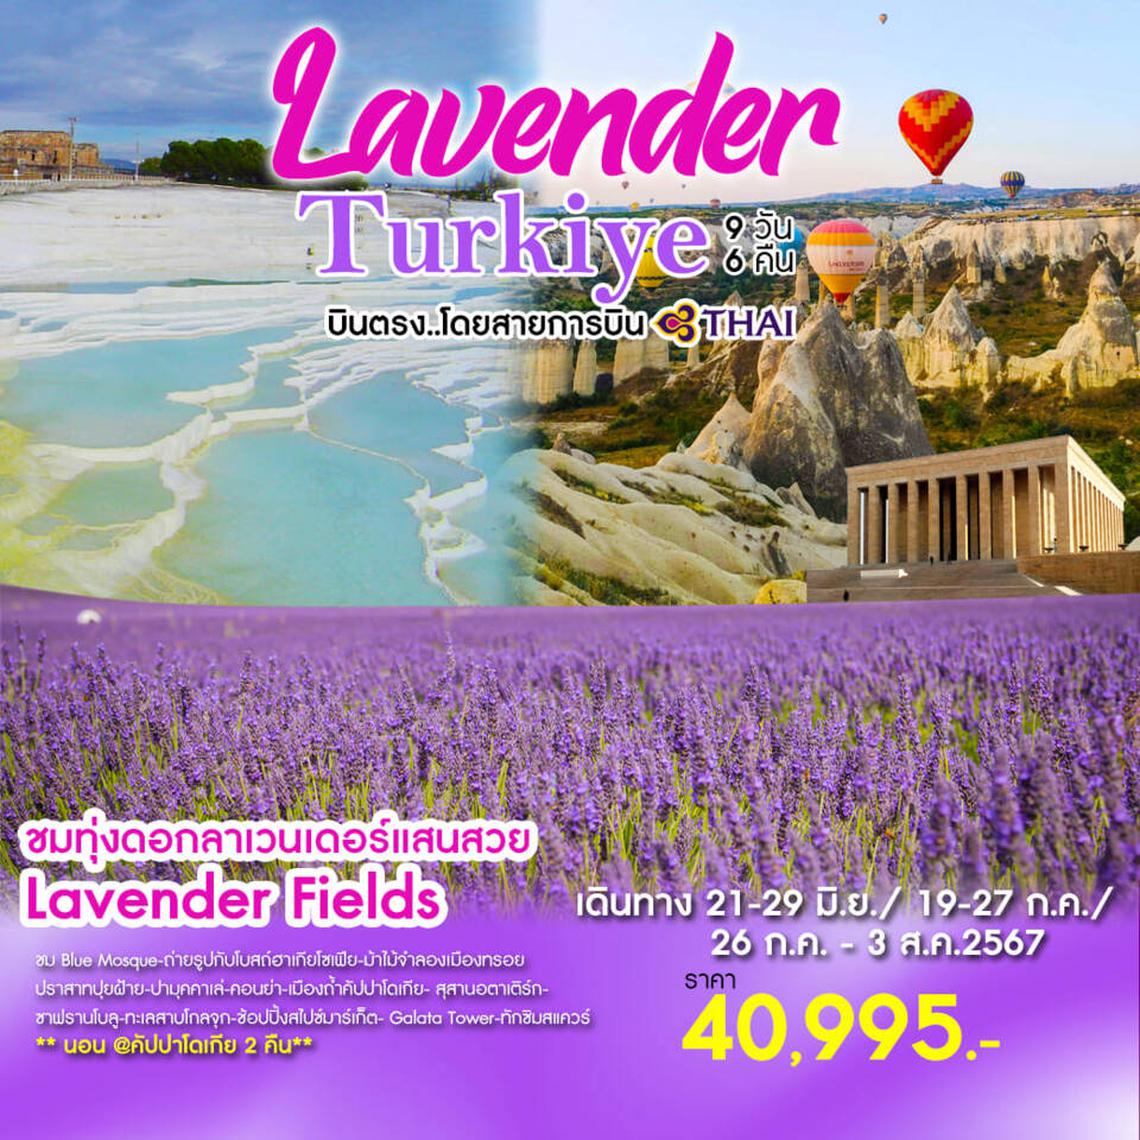 VTG-TGIST Lavender Turkiye 9D6N